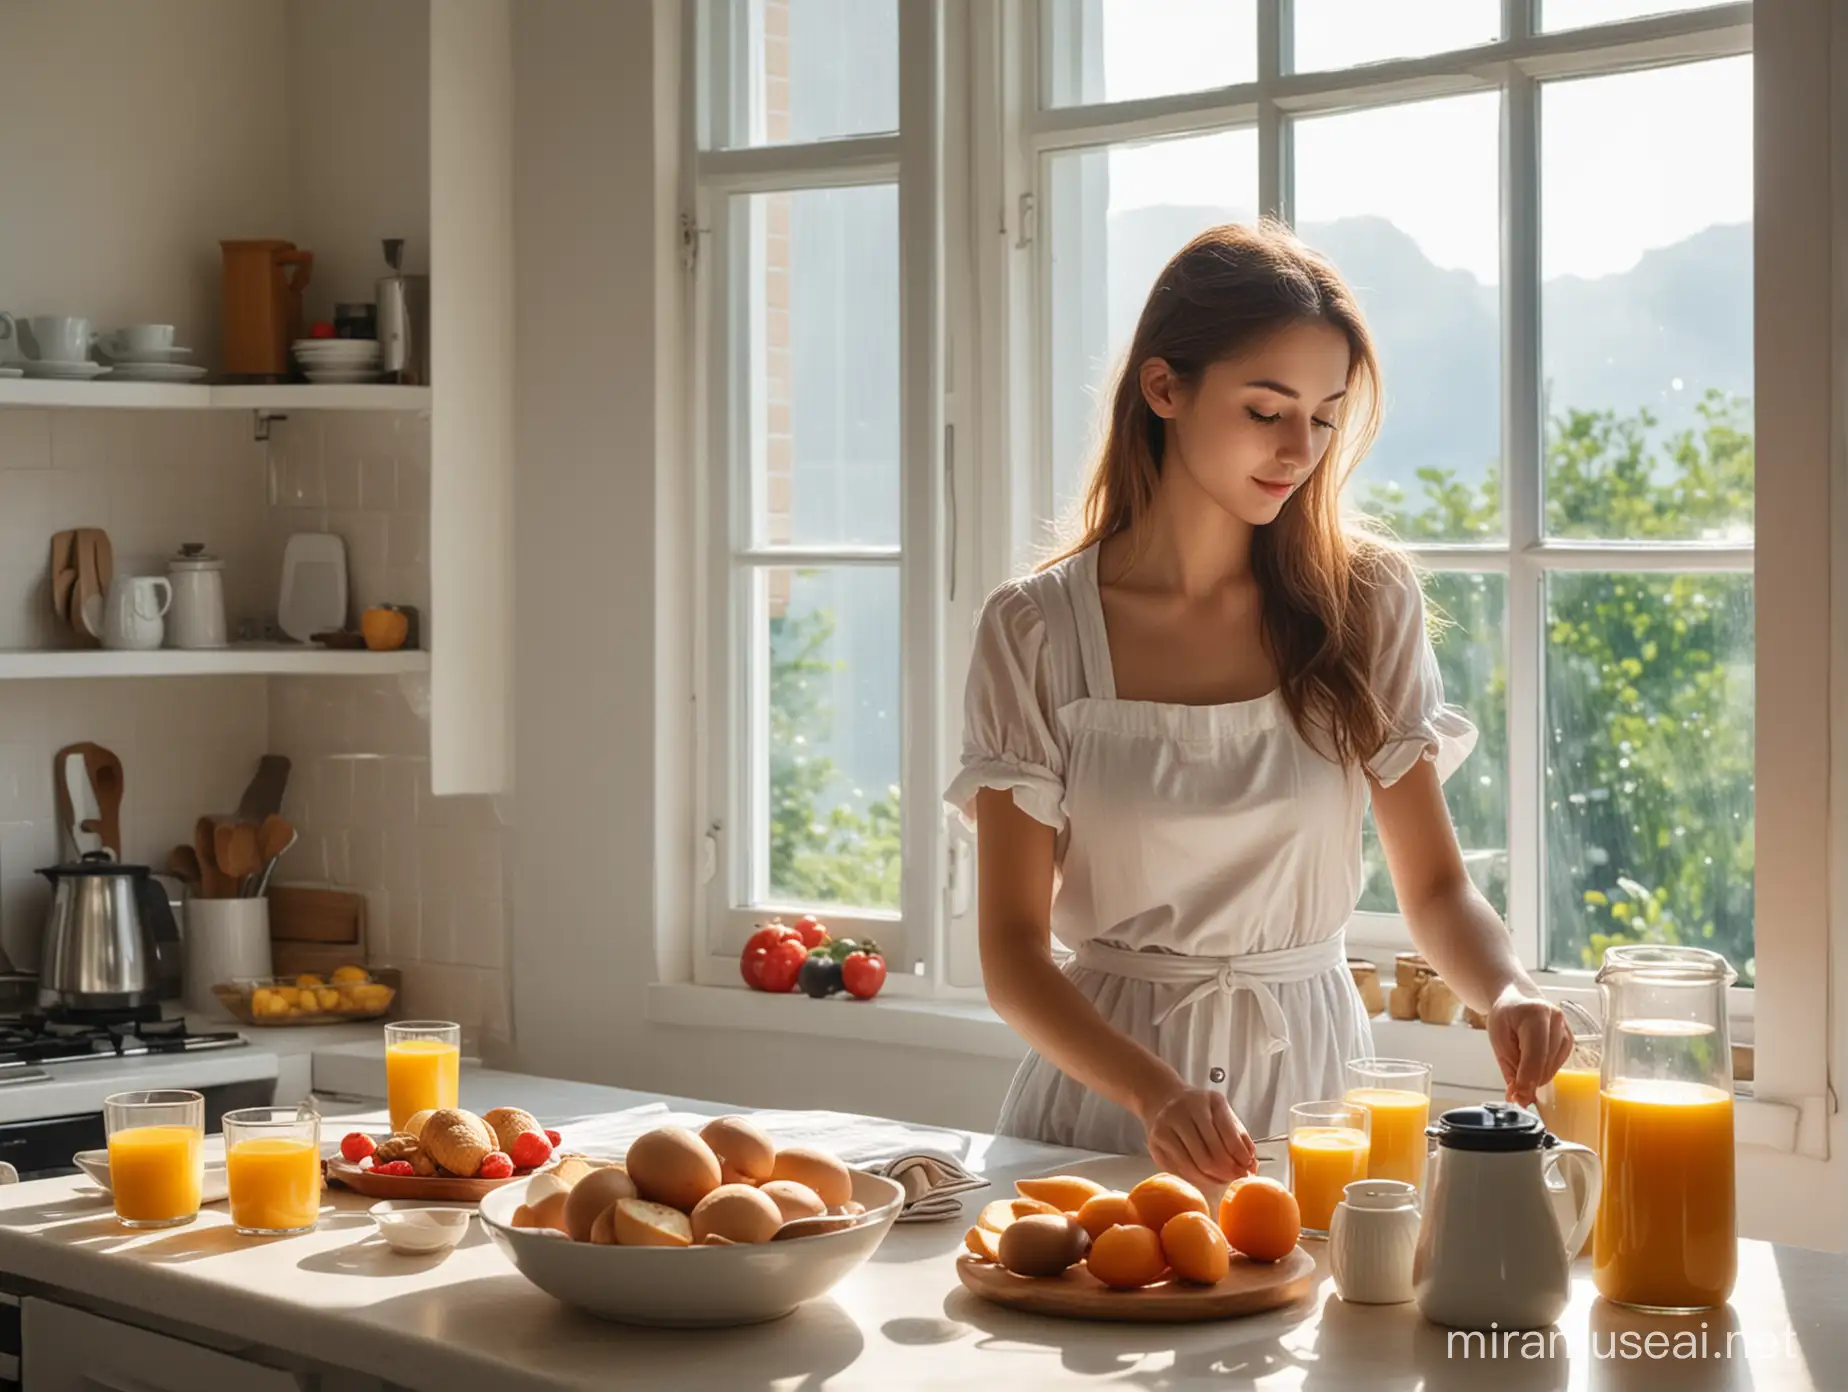 beautiful girl prepare breakfast in the kitchen and morning sunlight  glass window , fine image
